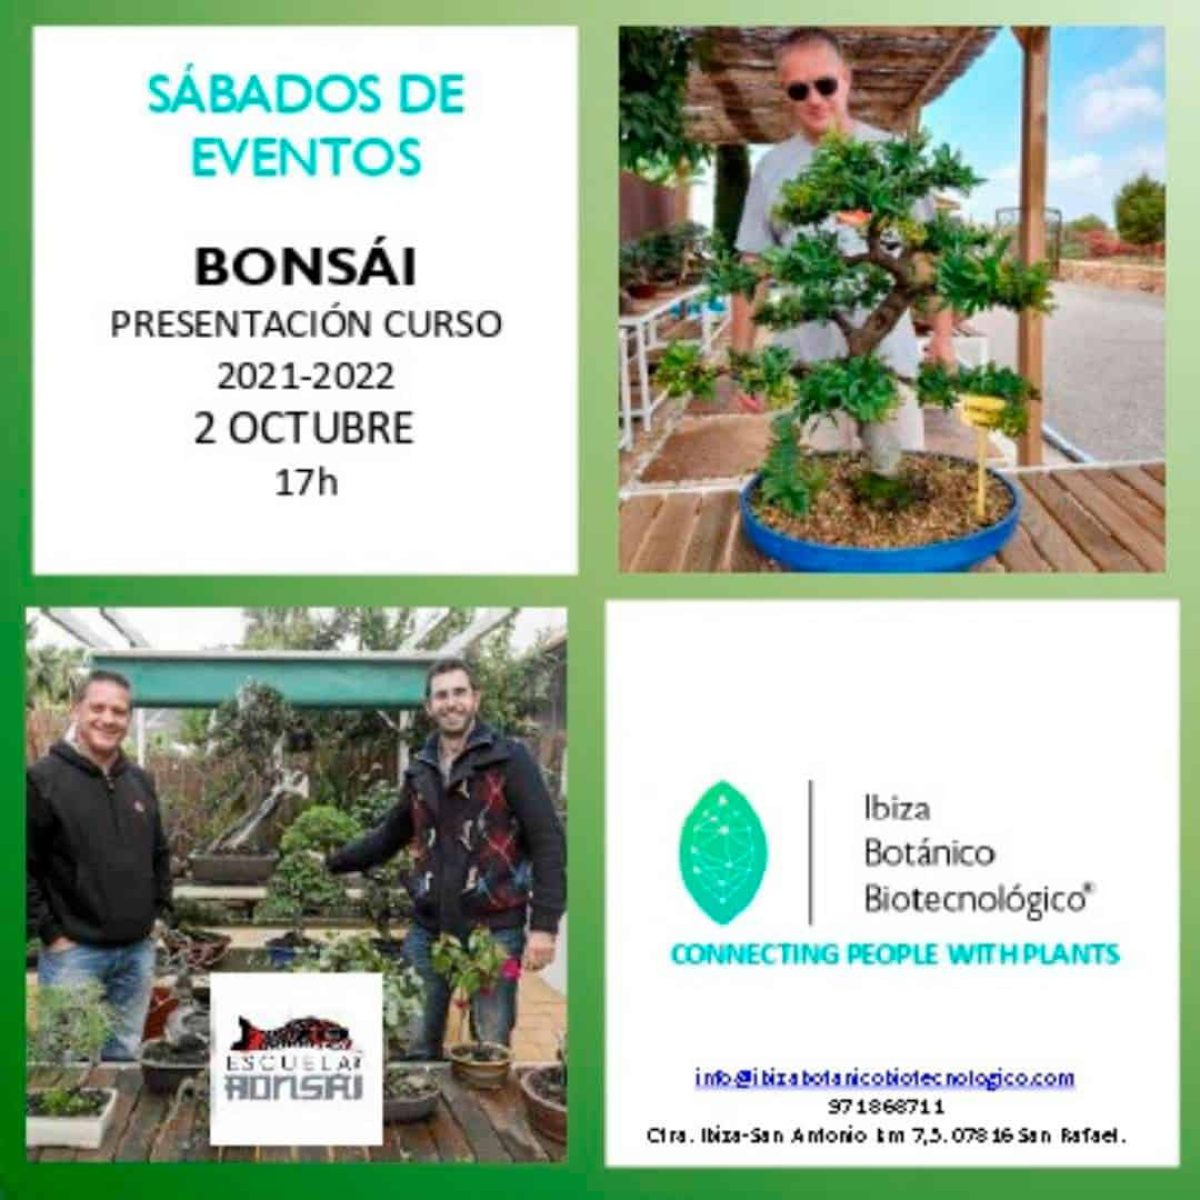 presentation-course-bonsai-ibiza-botanical-biotechnology-2021-welcometoibiza